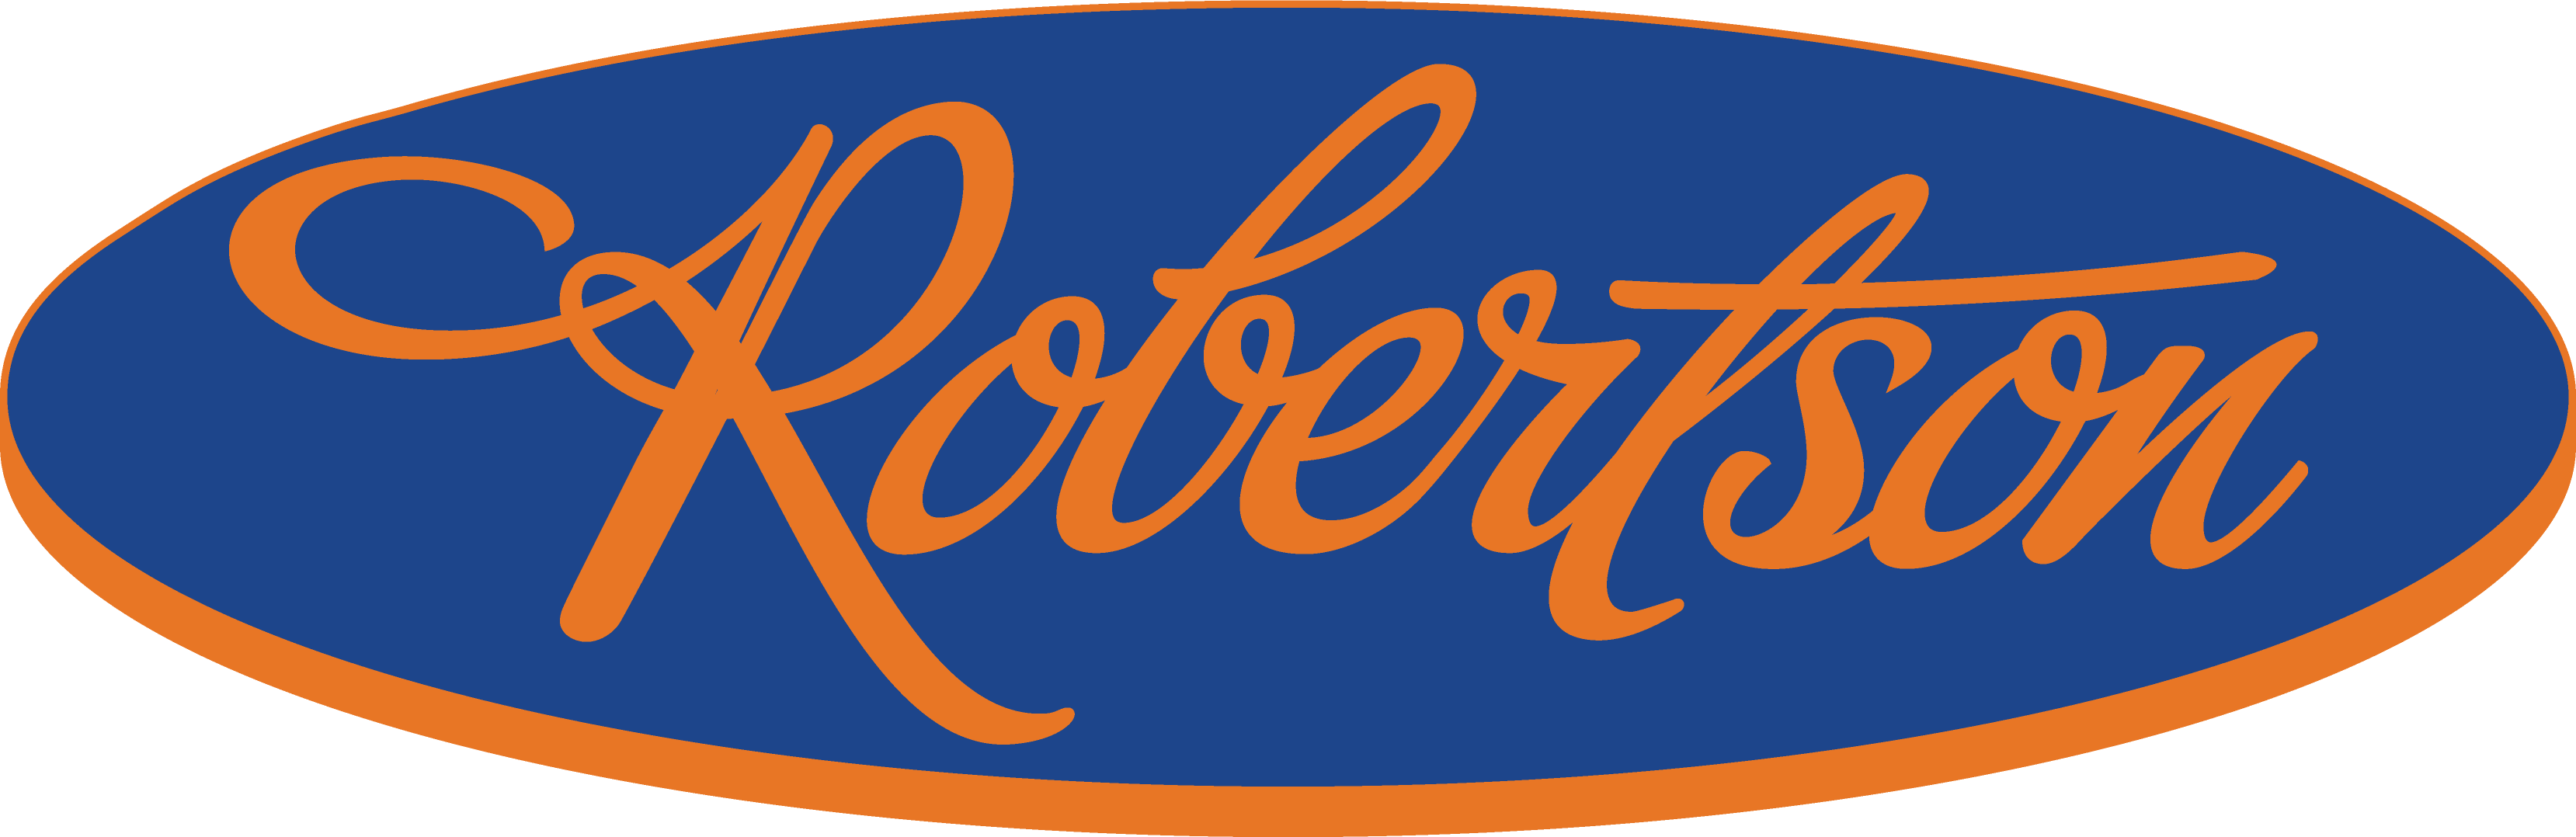 Robertson logo